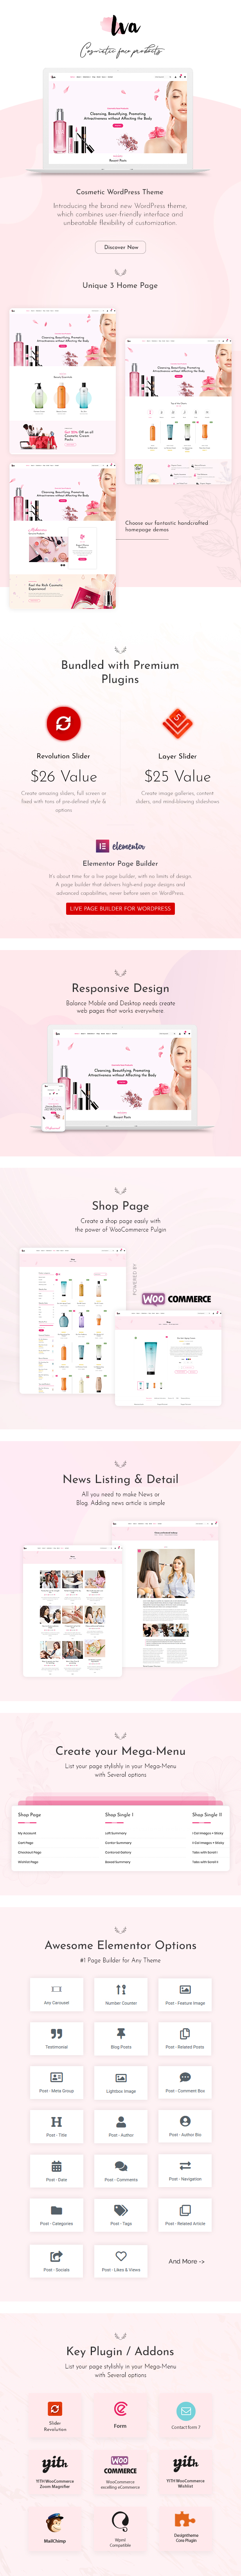 Iva - Beauty Store, Cosmetics WordPress Theme - 1